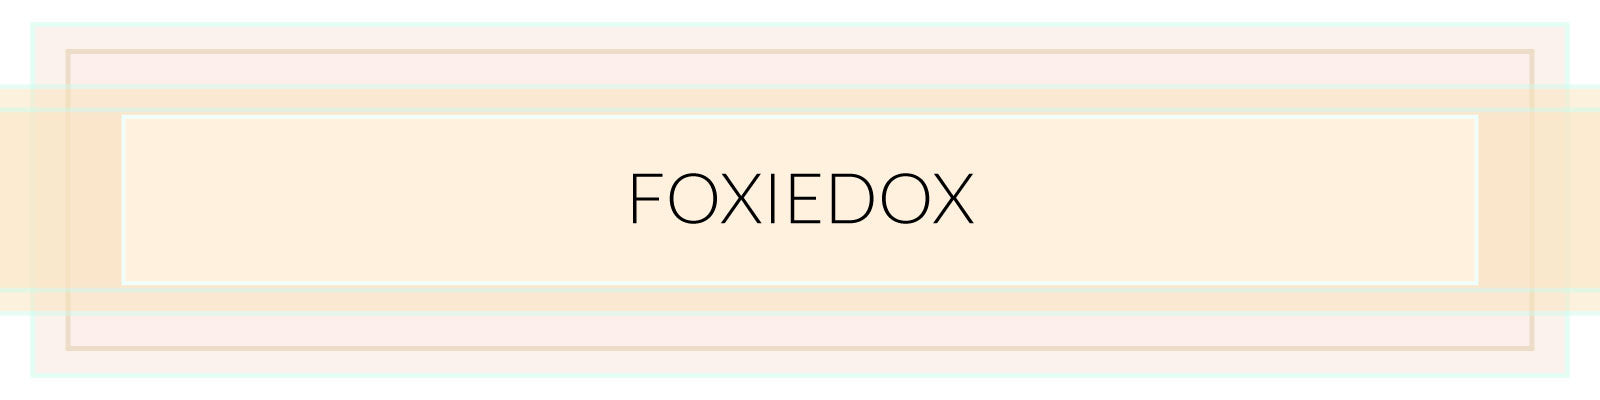 Foxiedox